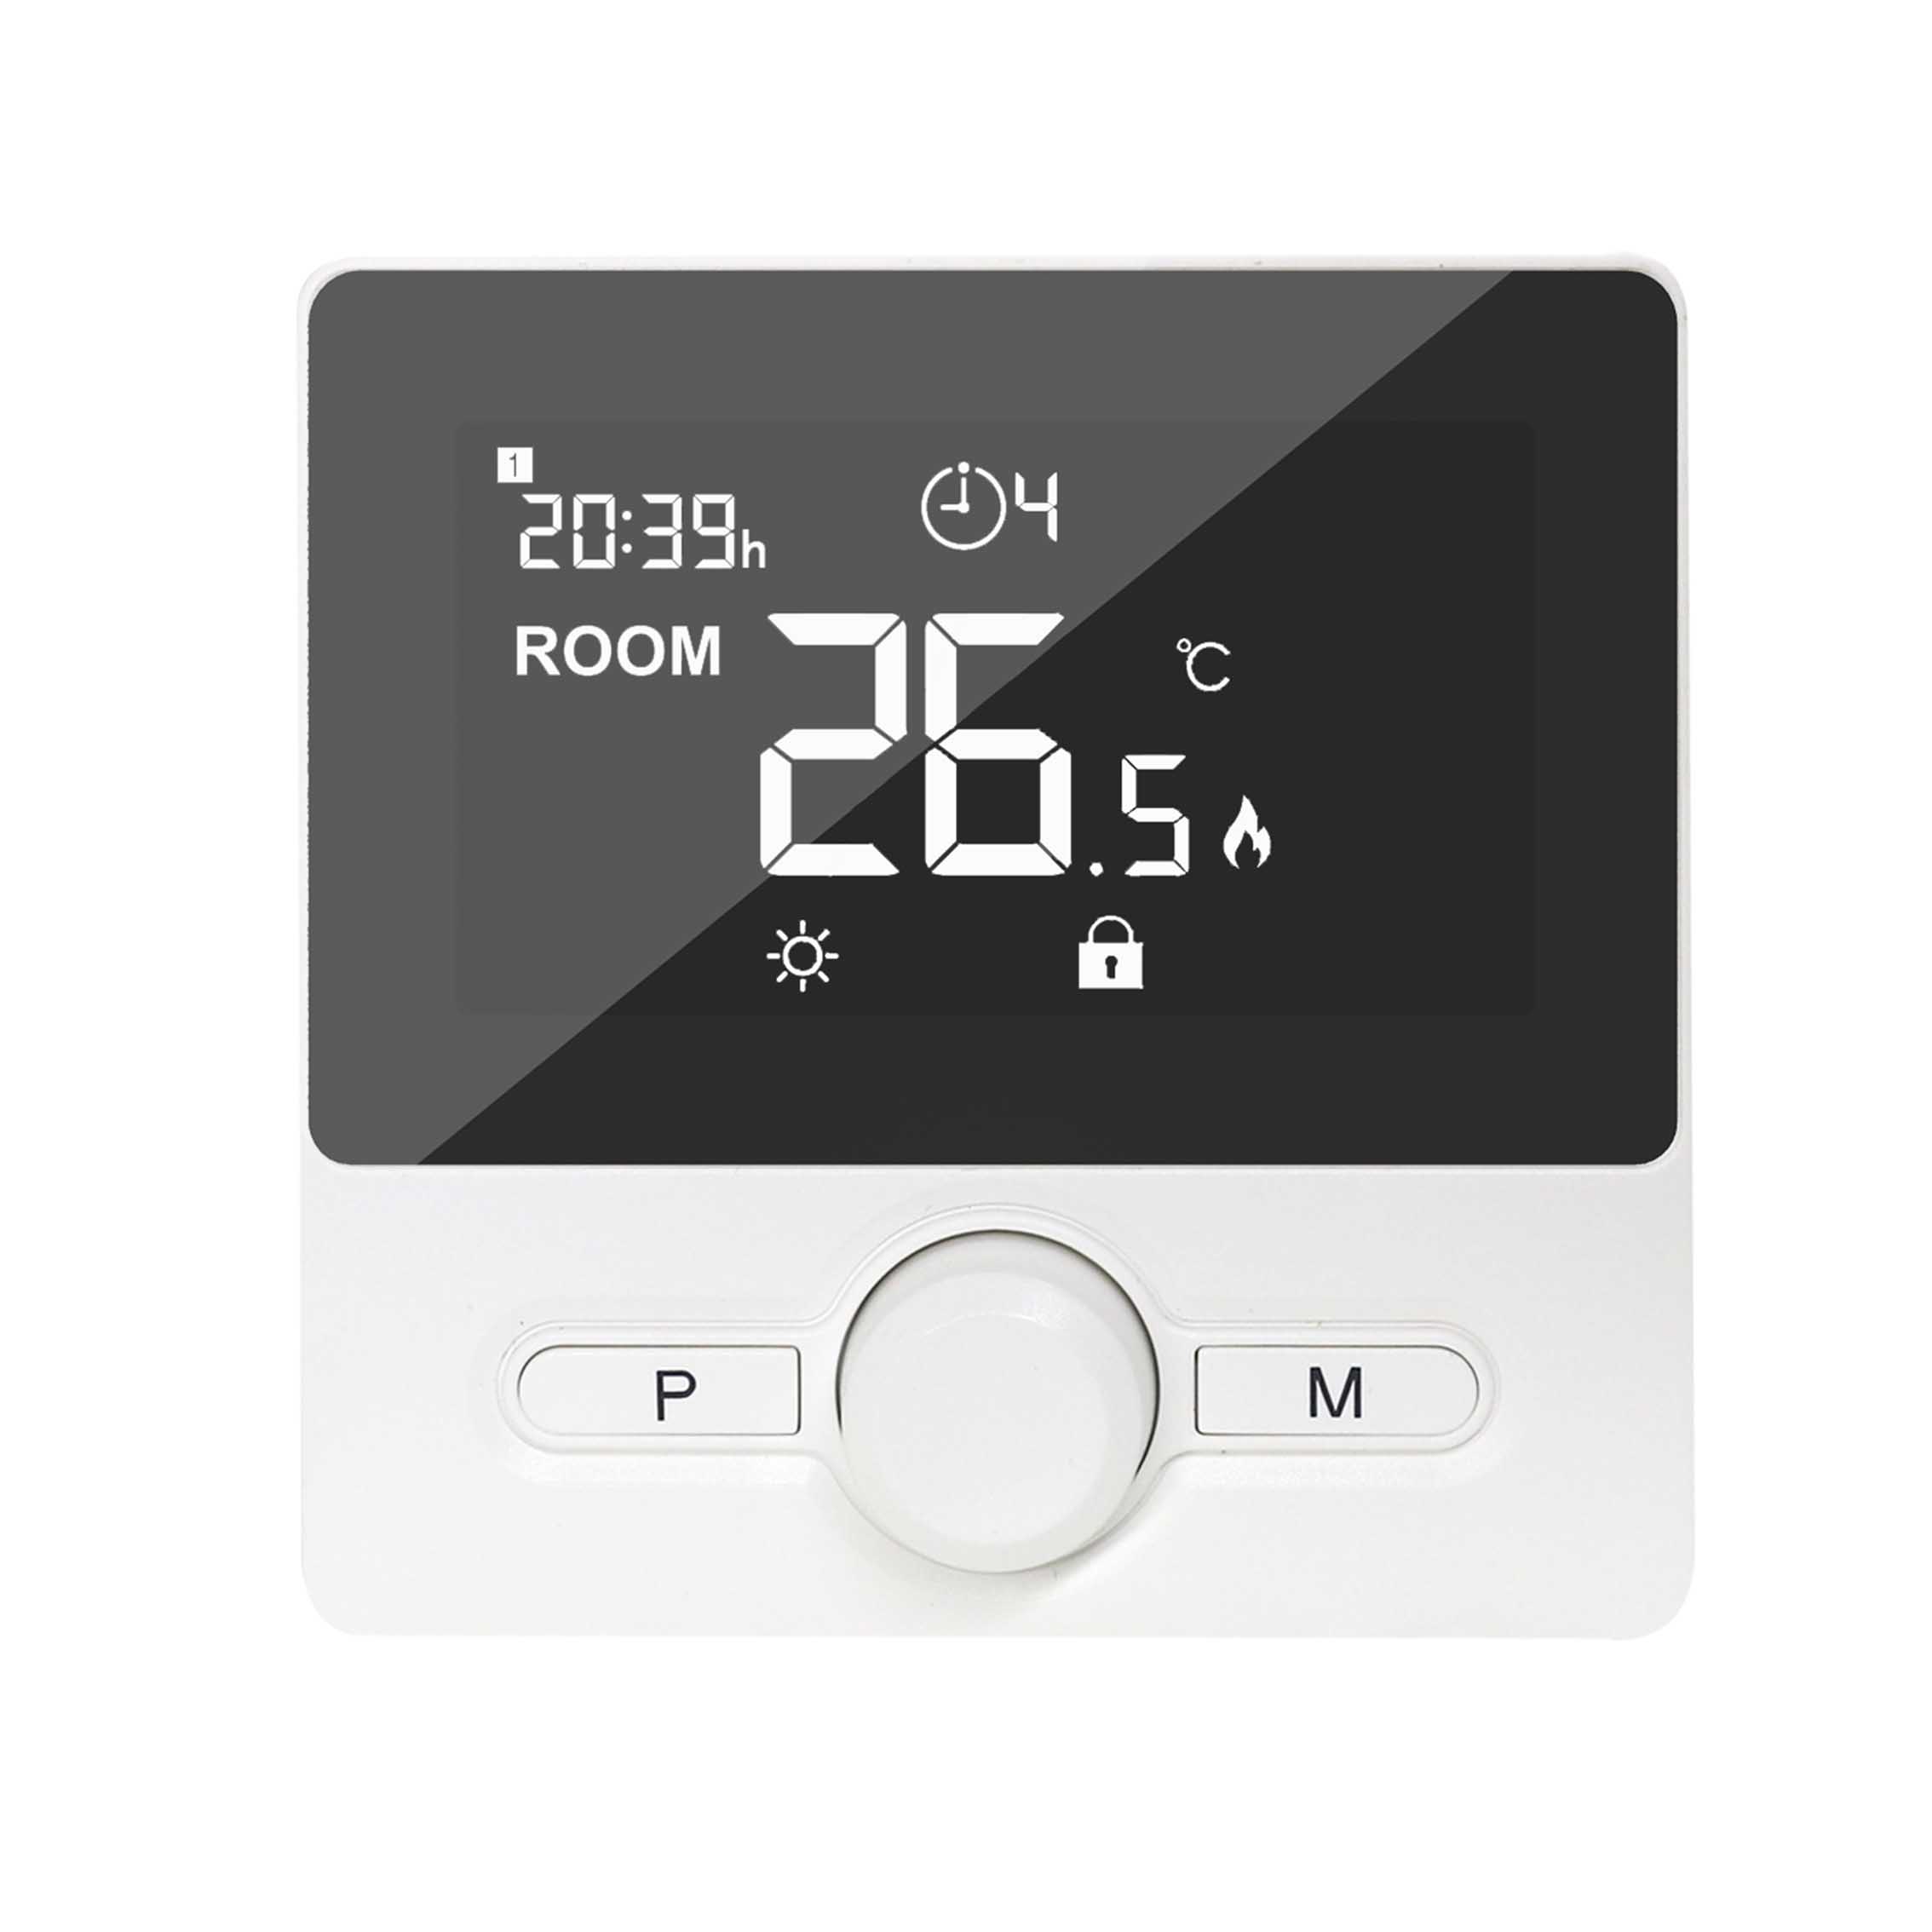 Modbus thermostat